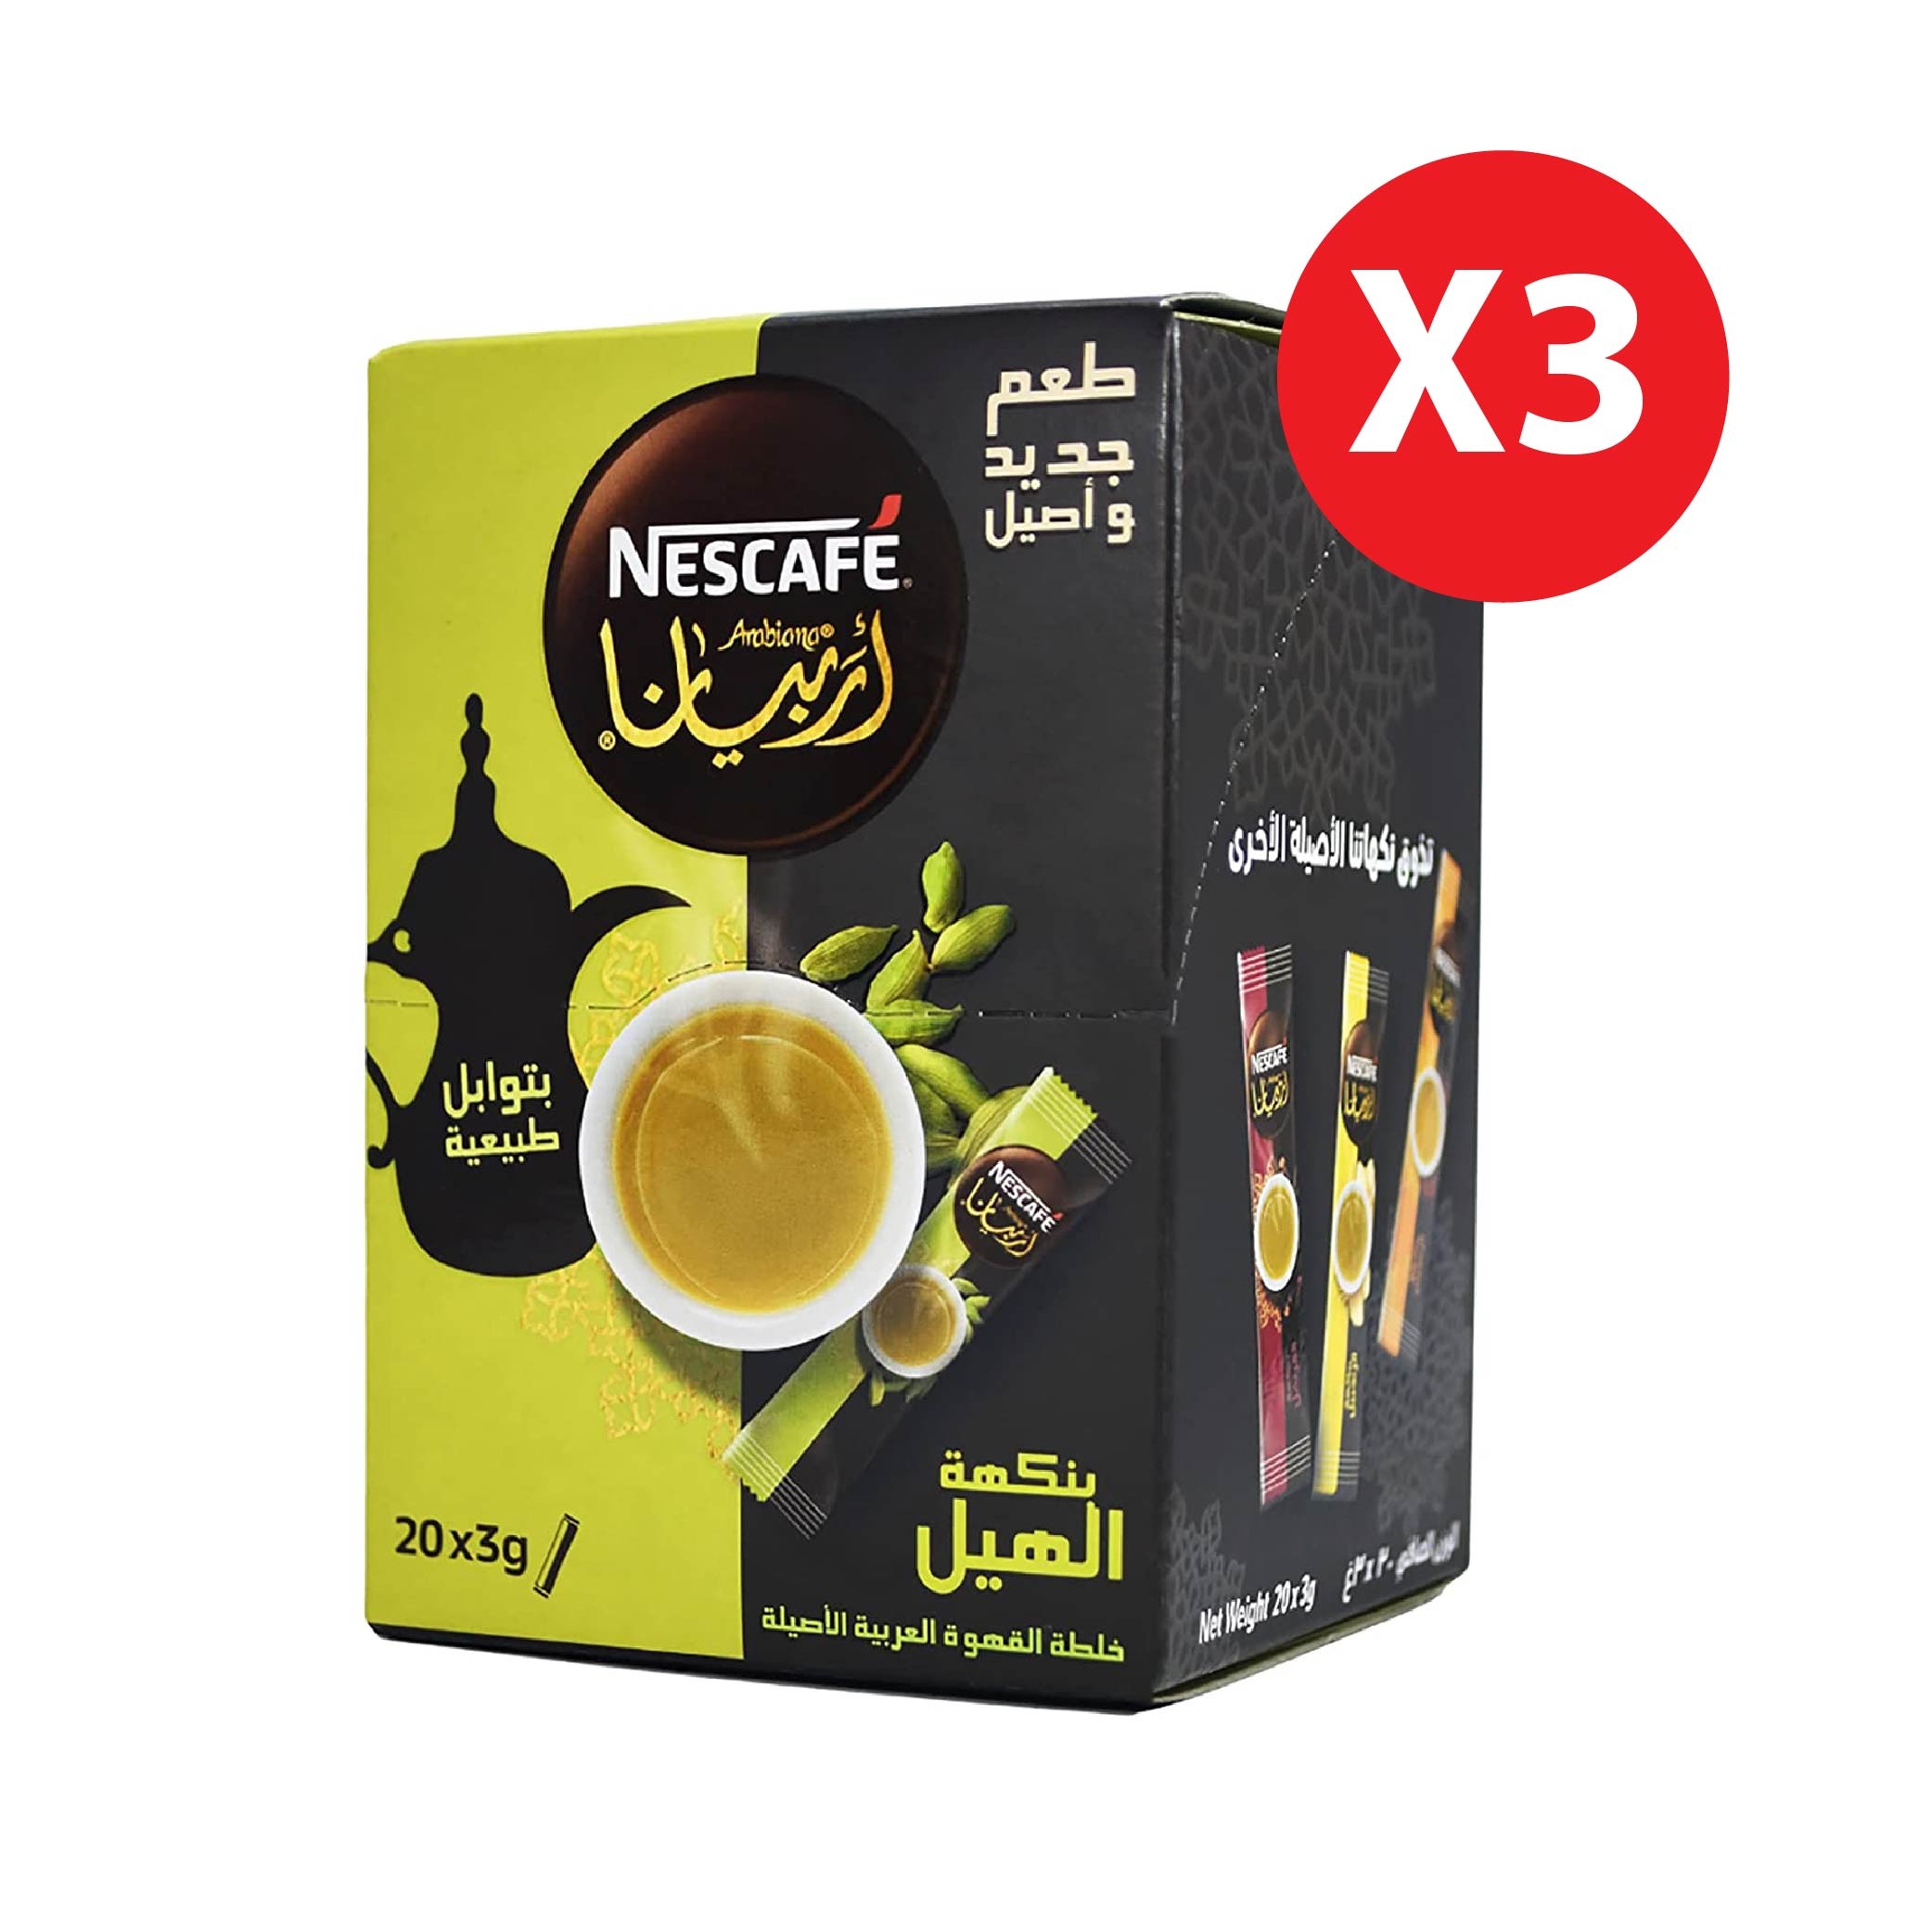 Nestle Nescafe Cinnamon Flavored Arabic Coffee - 20 sticks, 3 packs.